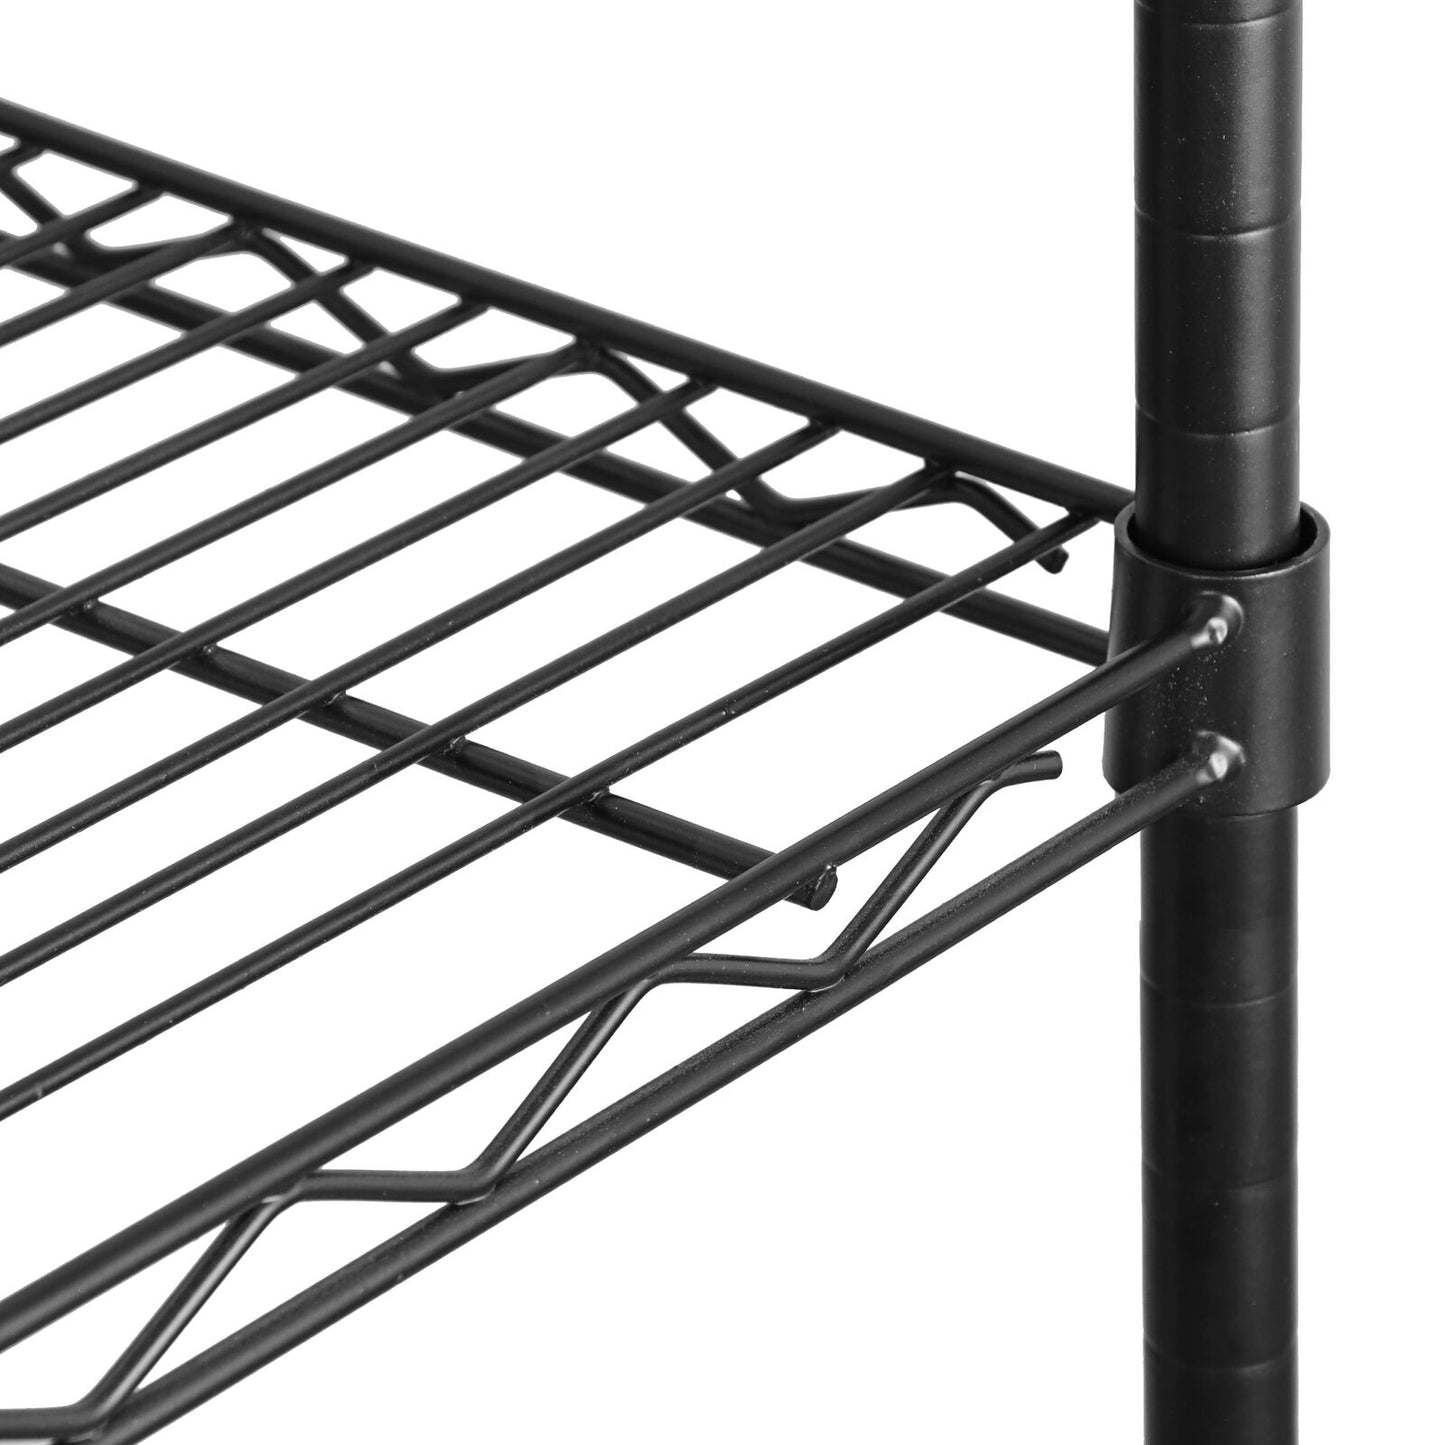 4-Tier Metal Wire Shelf Rack Storage Shelving Unit Organizer for Kitchen Black